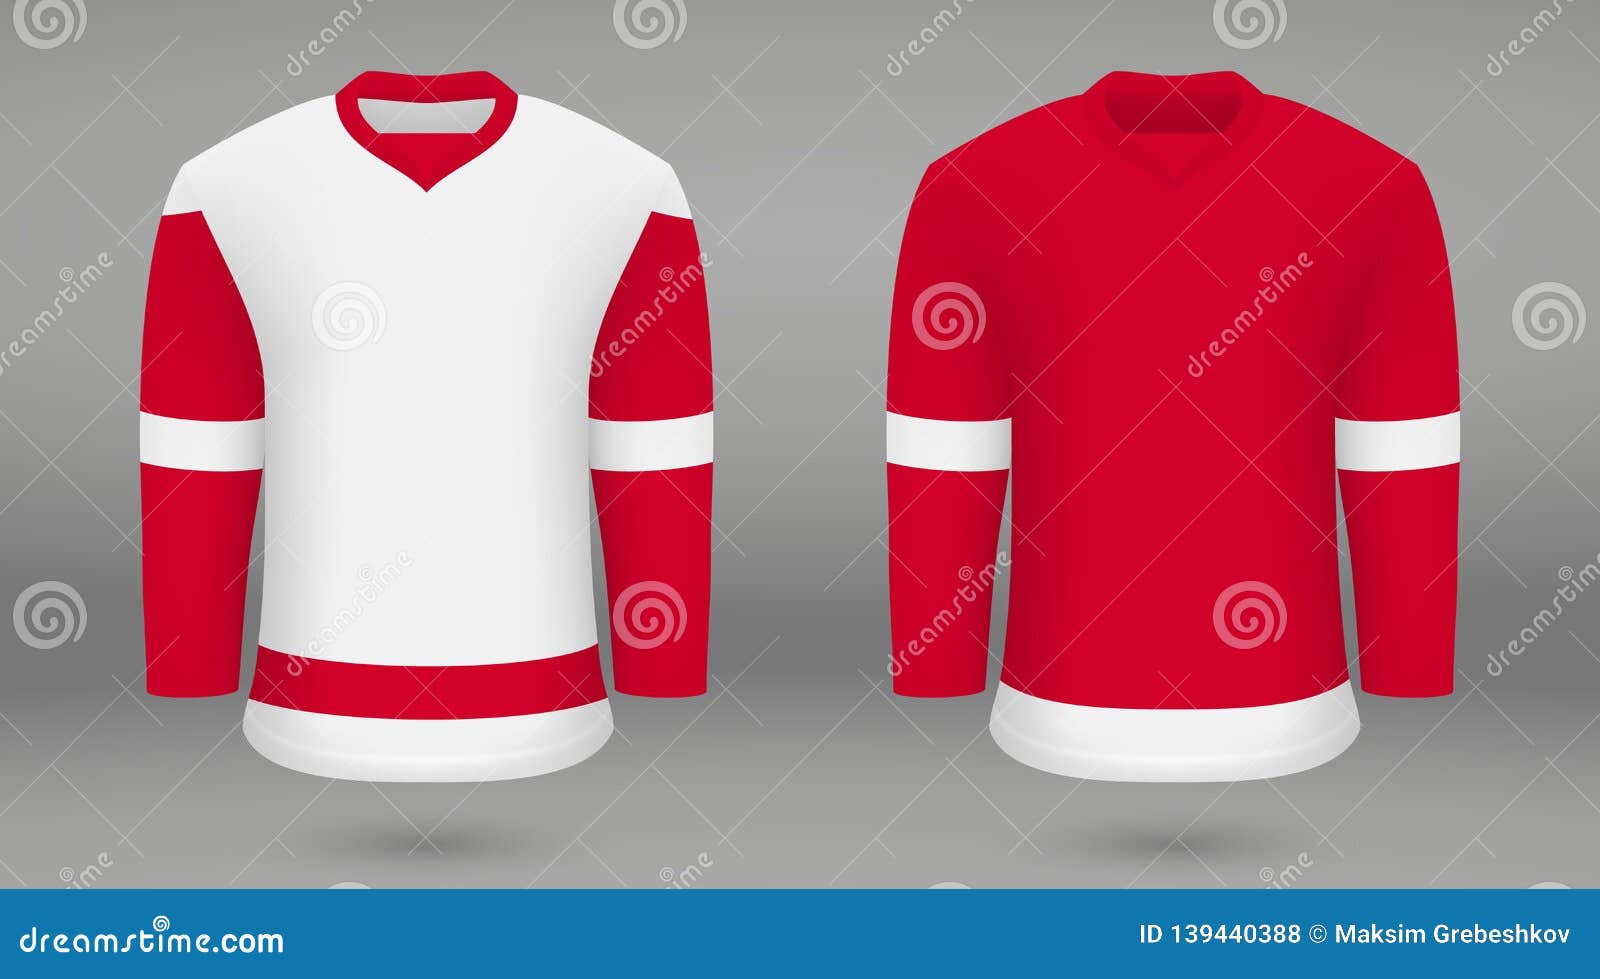 Download Shirt Template Forice Hockey Jersey Stock Illustration Illustration Of Shirt Body 139440388